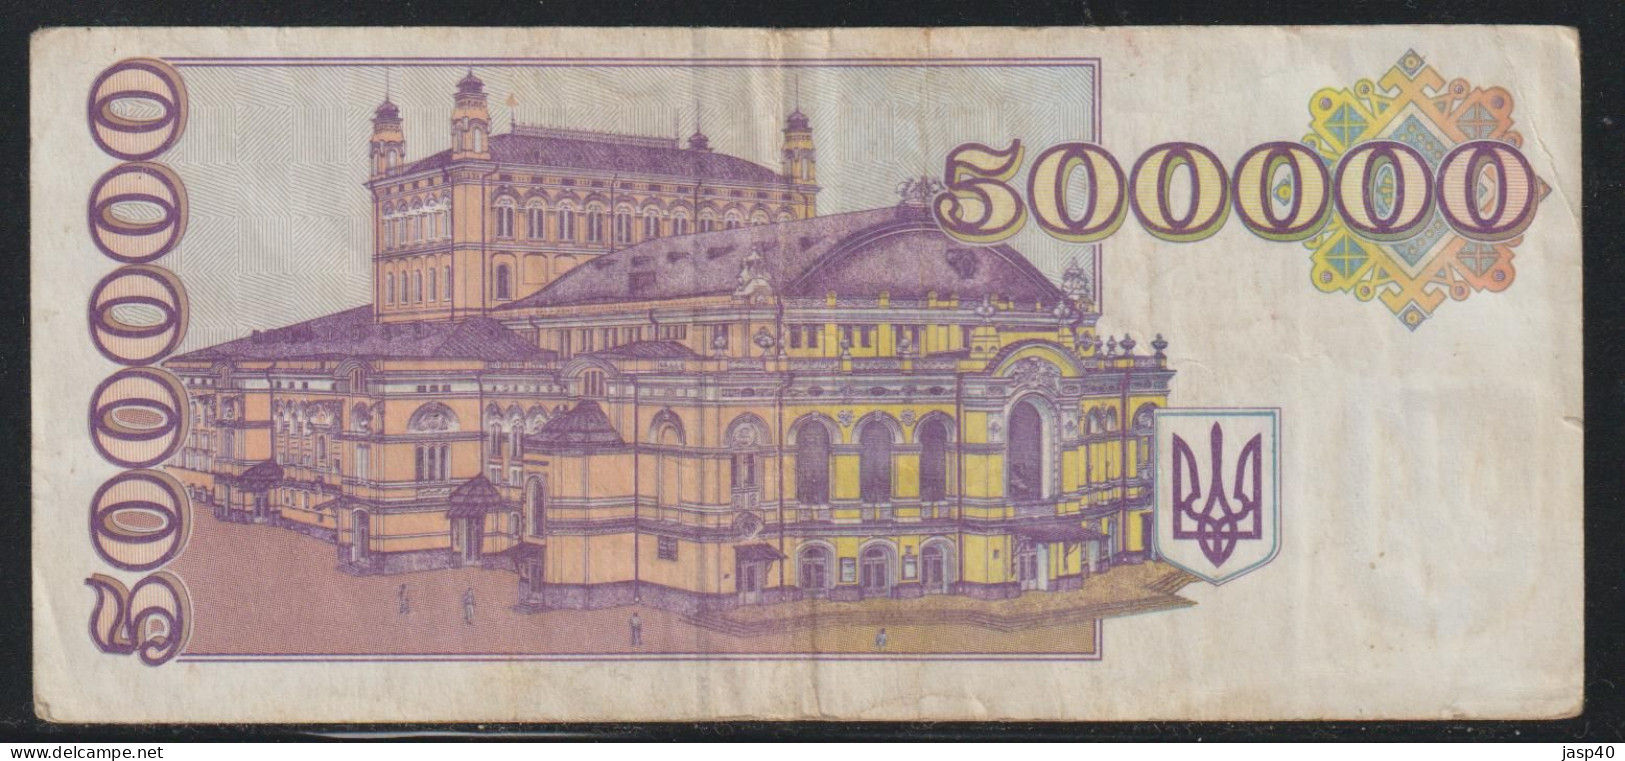 UCRANIA - 500000 KARBO DE 1994 - 50 Reichsmark